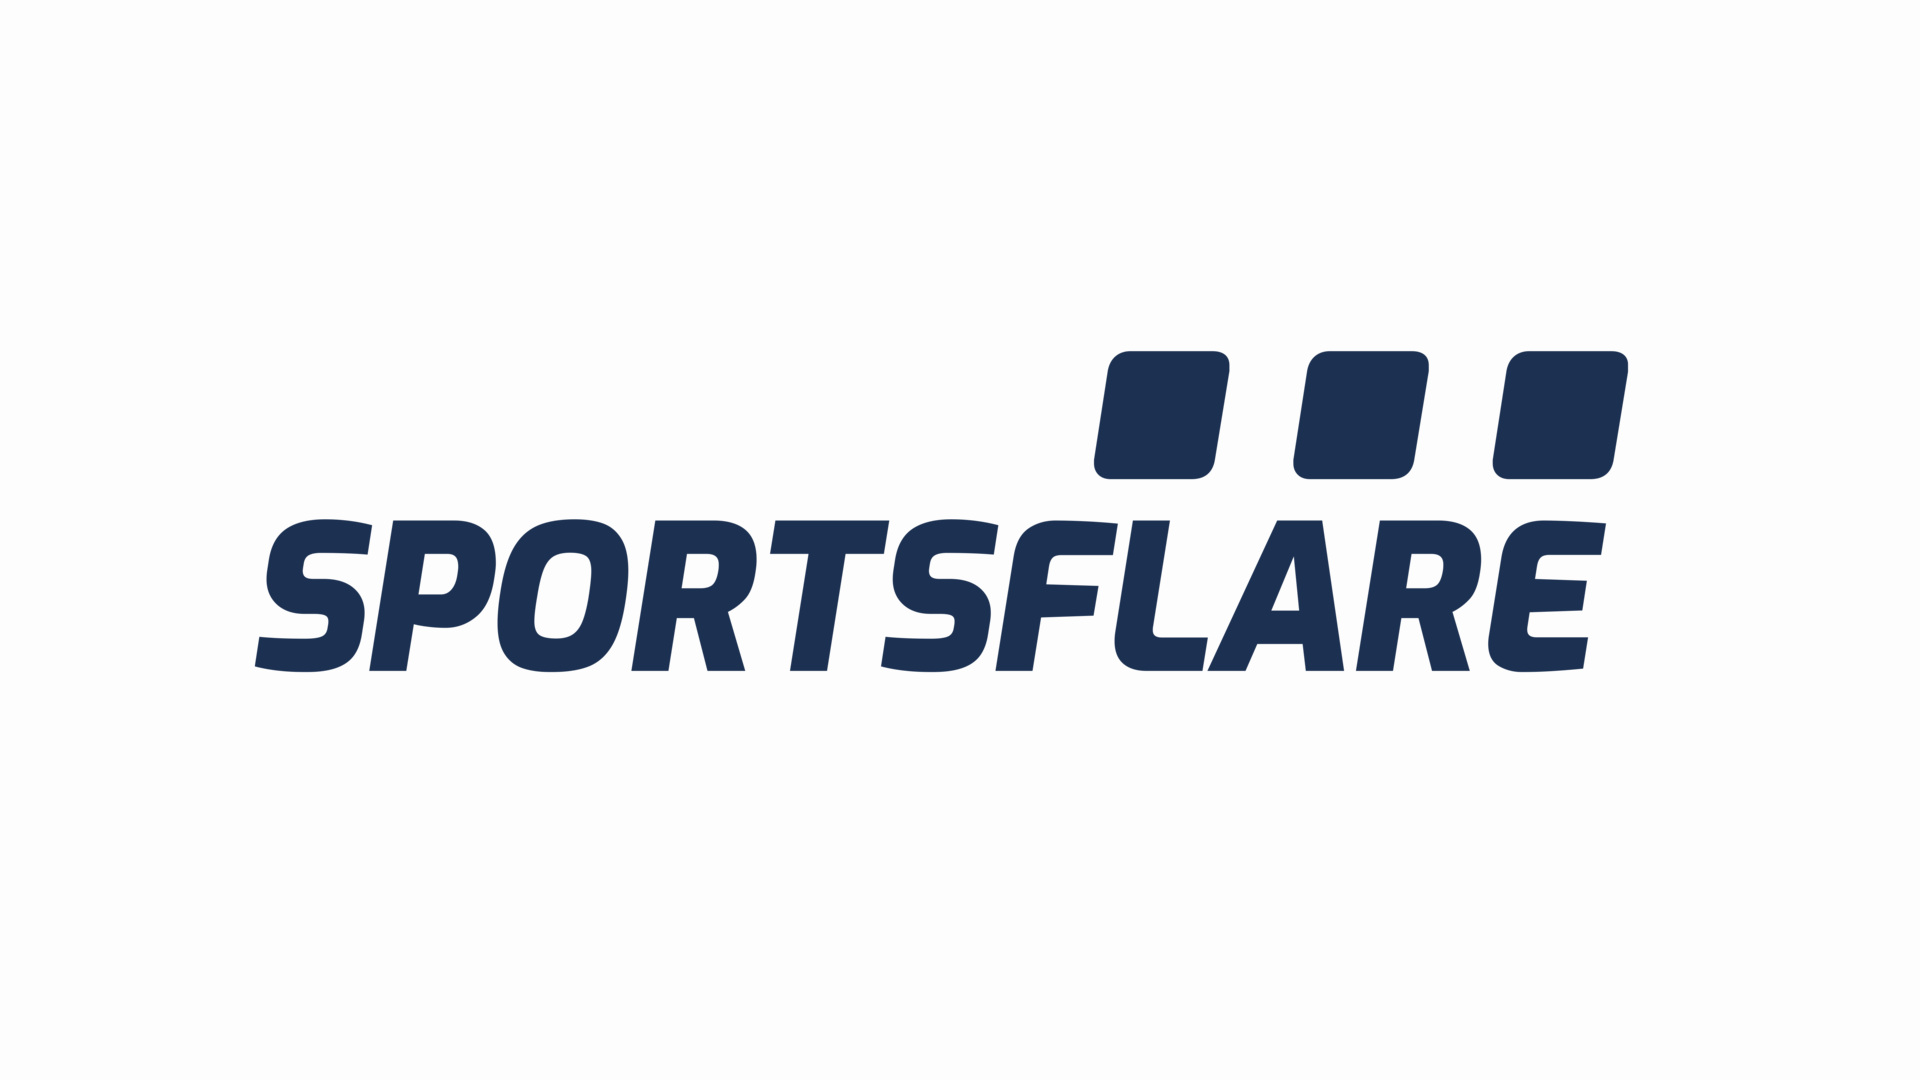 Sportsflare partners with Bayes Esports